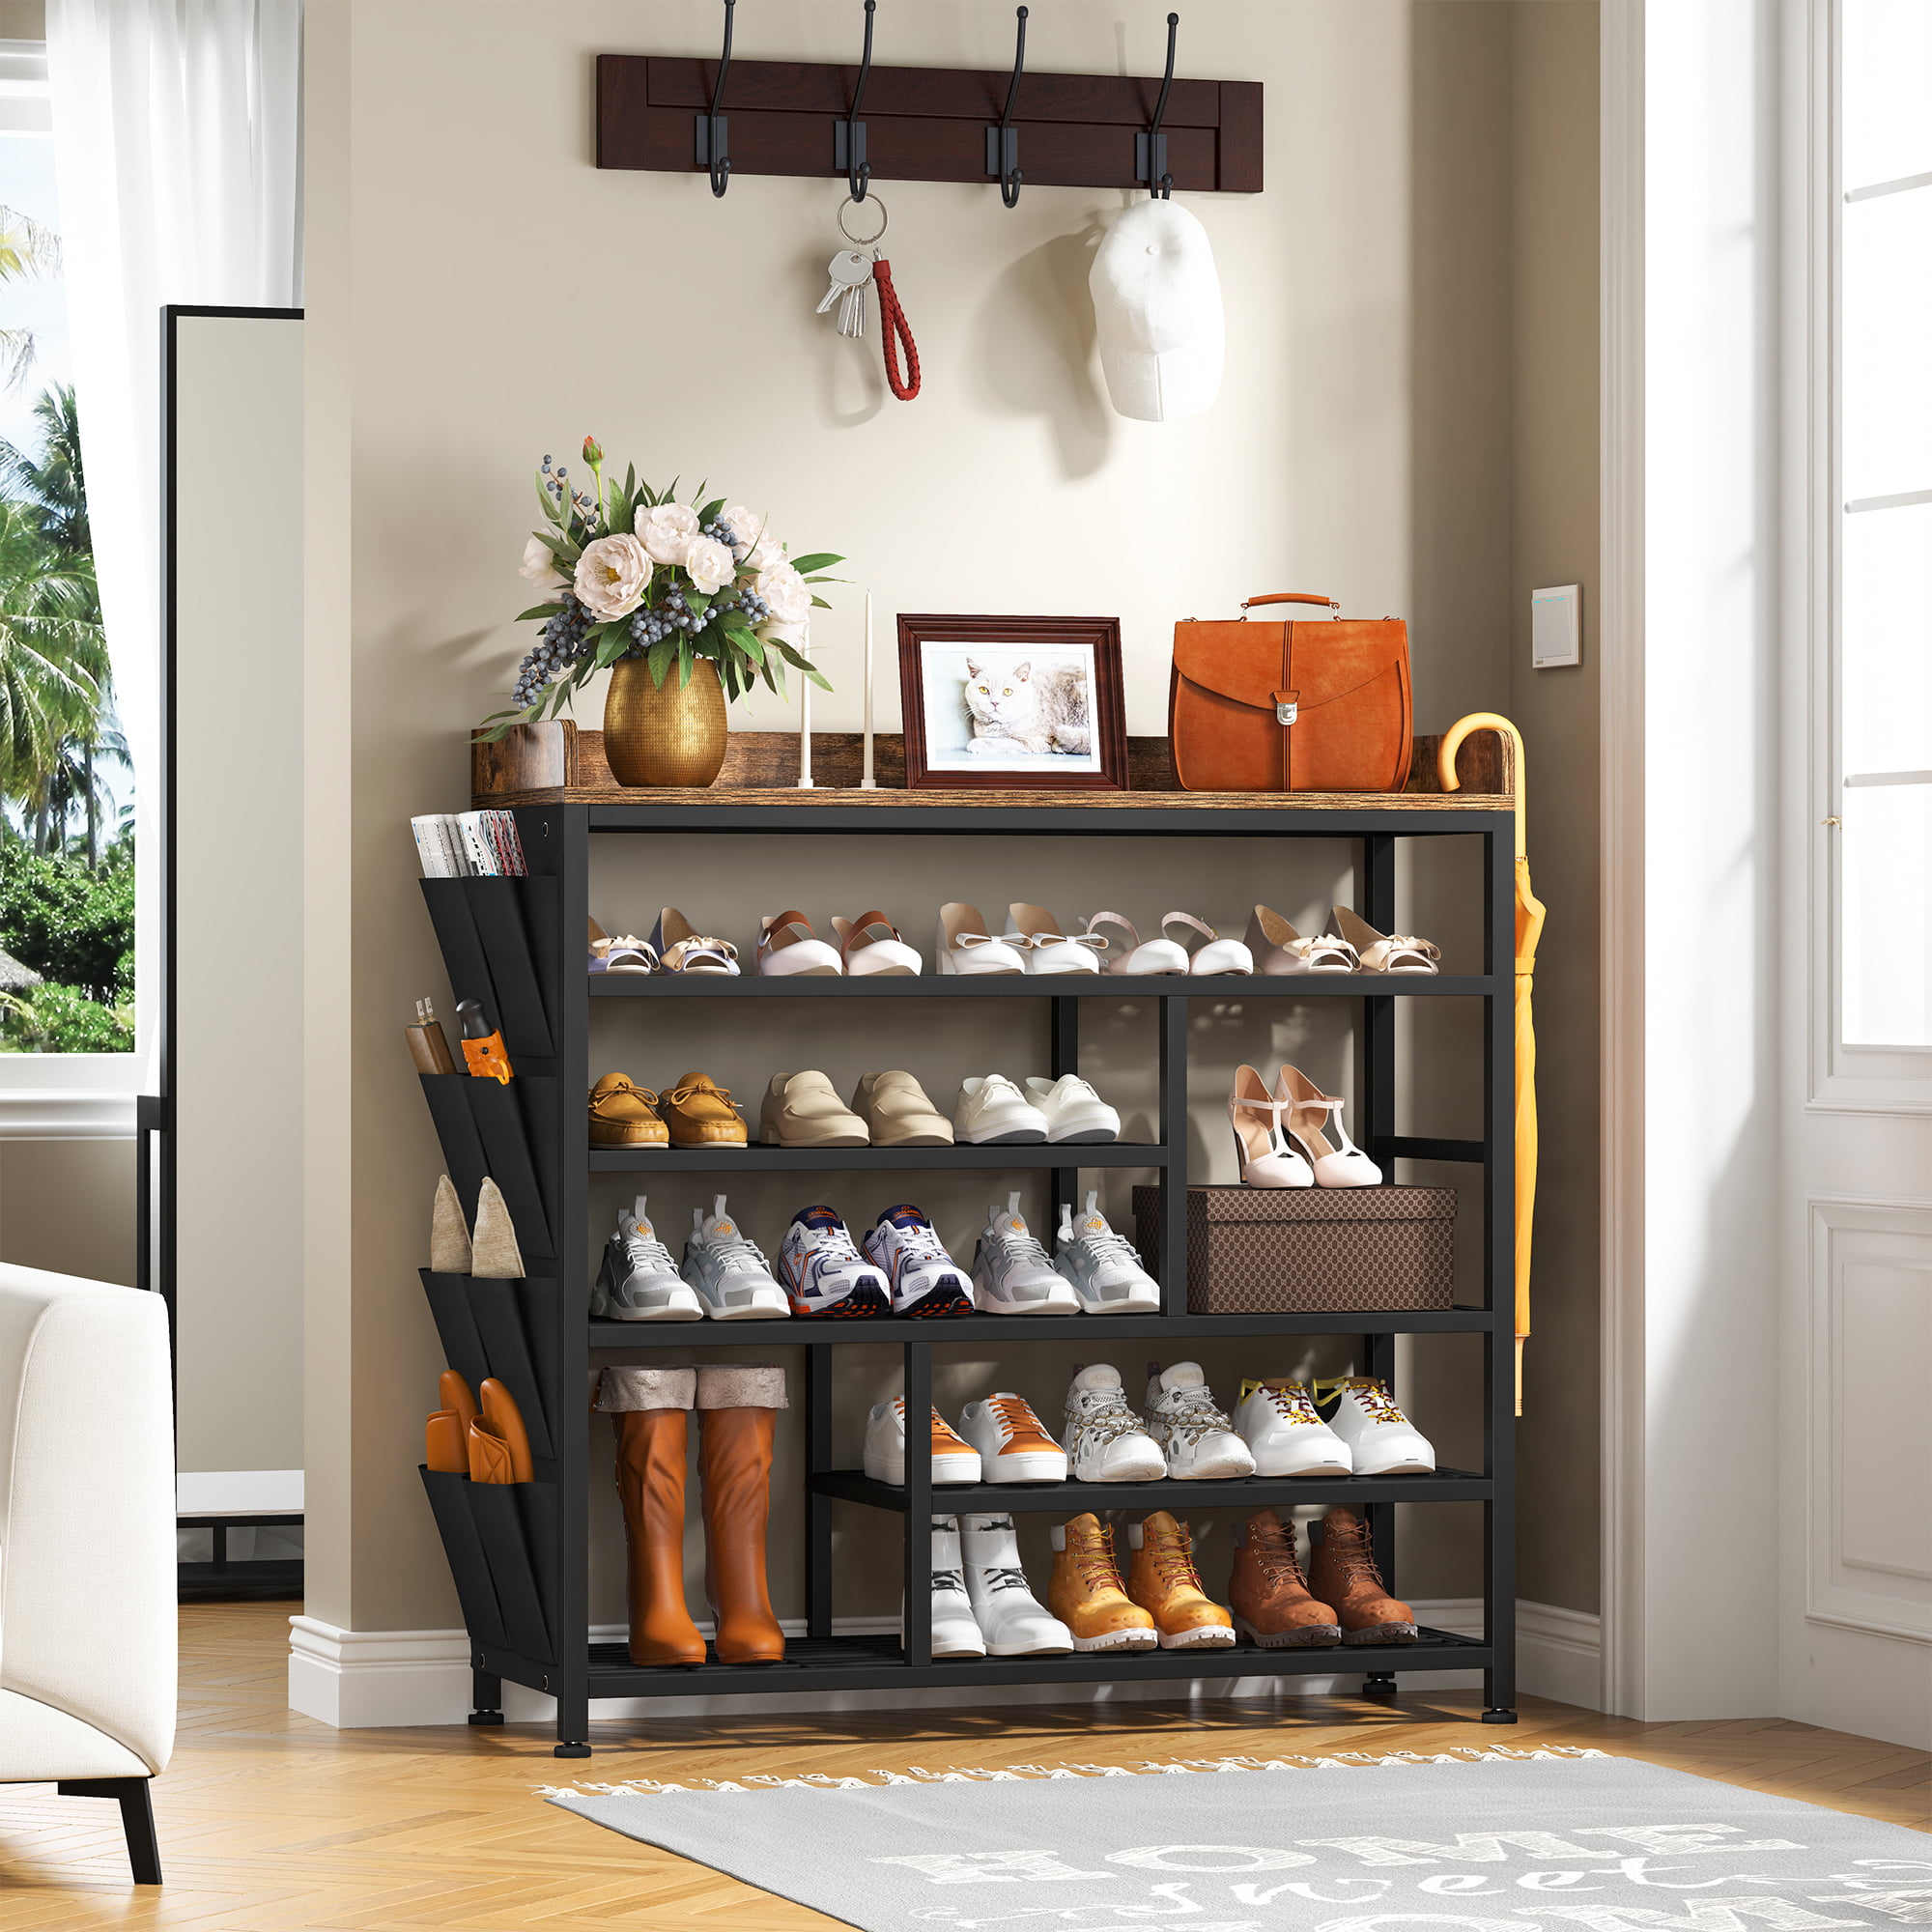  HOMIDEC Shoe Rack, 6 Tier Shoe Storage Cabinet 24 Pair Plastic  Shoe Shelves Organizer for Closet Hallway Bedroom Entryway : Home & Kitchen